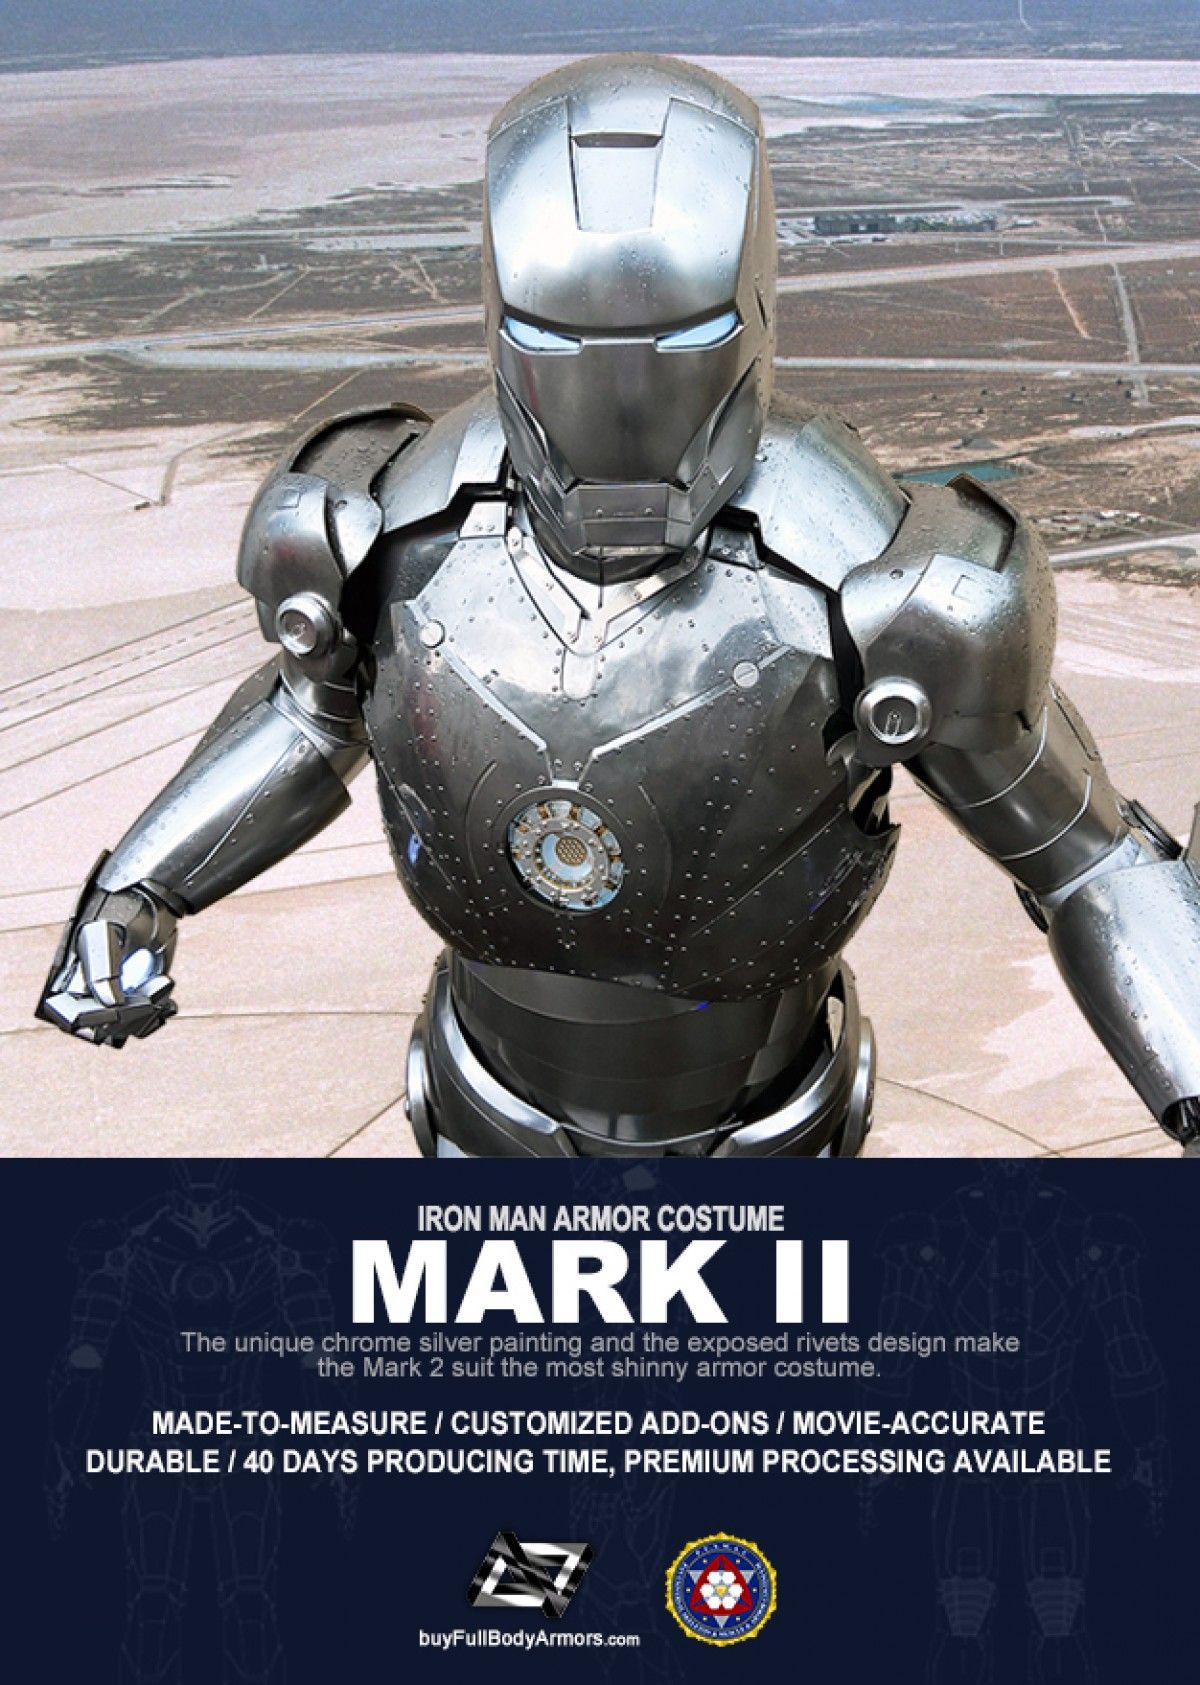 Buy Iron Man suit, Halo Master Chief armor, Batman costume, Star Wars armor. Buy the Wearable Iron Man Armor Mark 2 (II) Suit Costume BuyFullBodyArmors.com